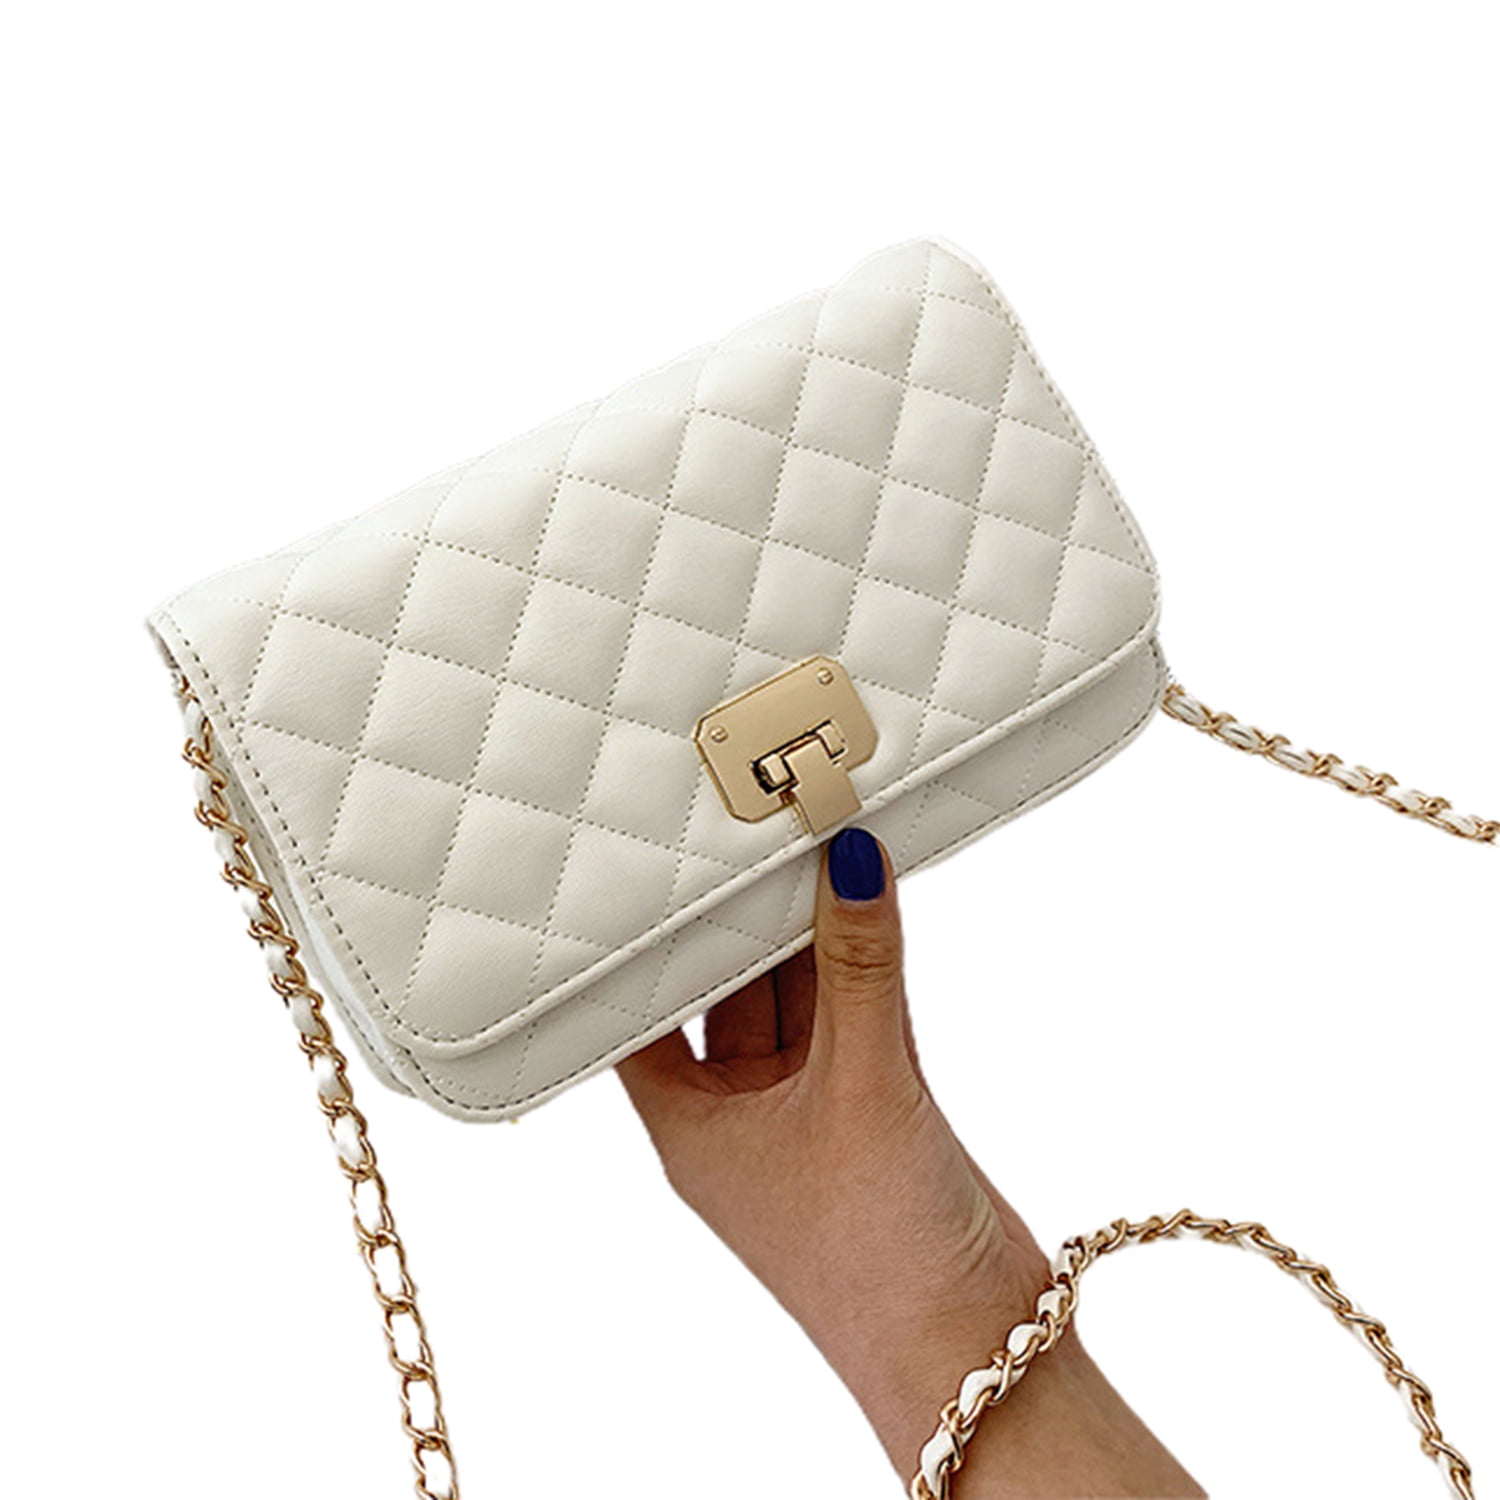 Luxury Sheepskin Square Handbag With Gold Ball Chain Purse Designer Fashion  For Women From Dhxingfashionbagss, $54.54 | DHgate.Com